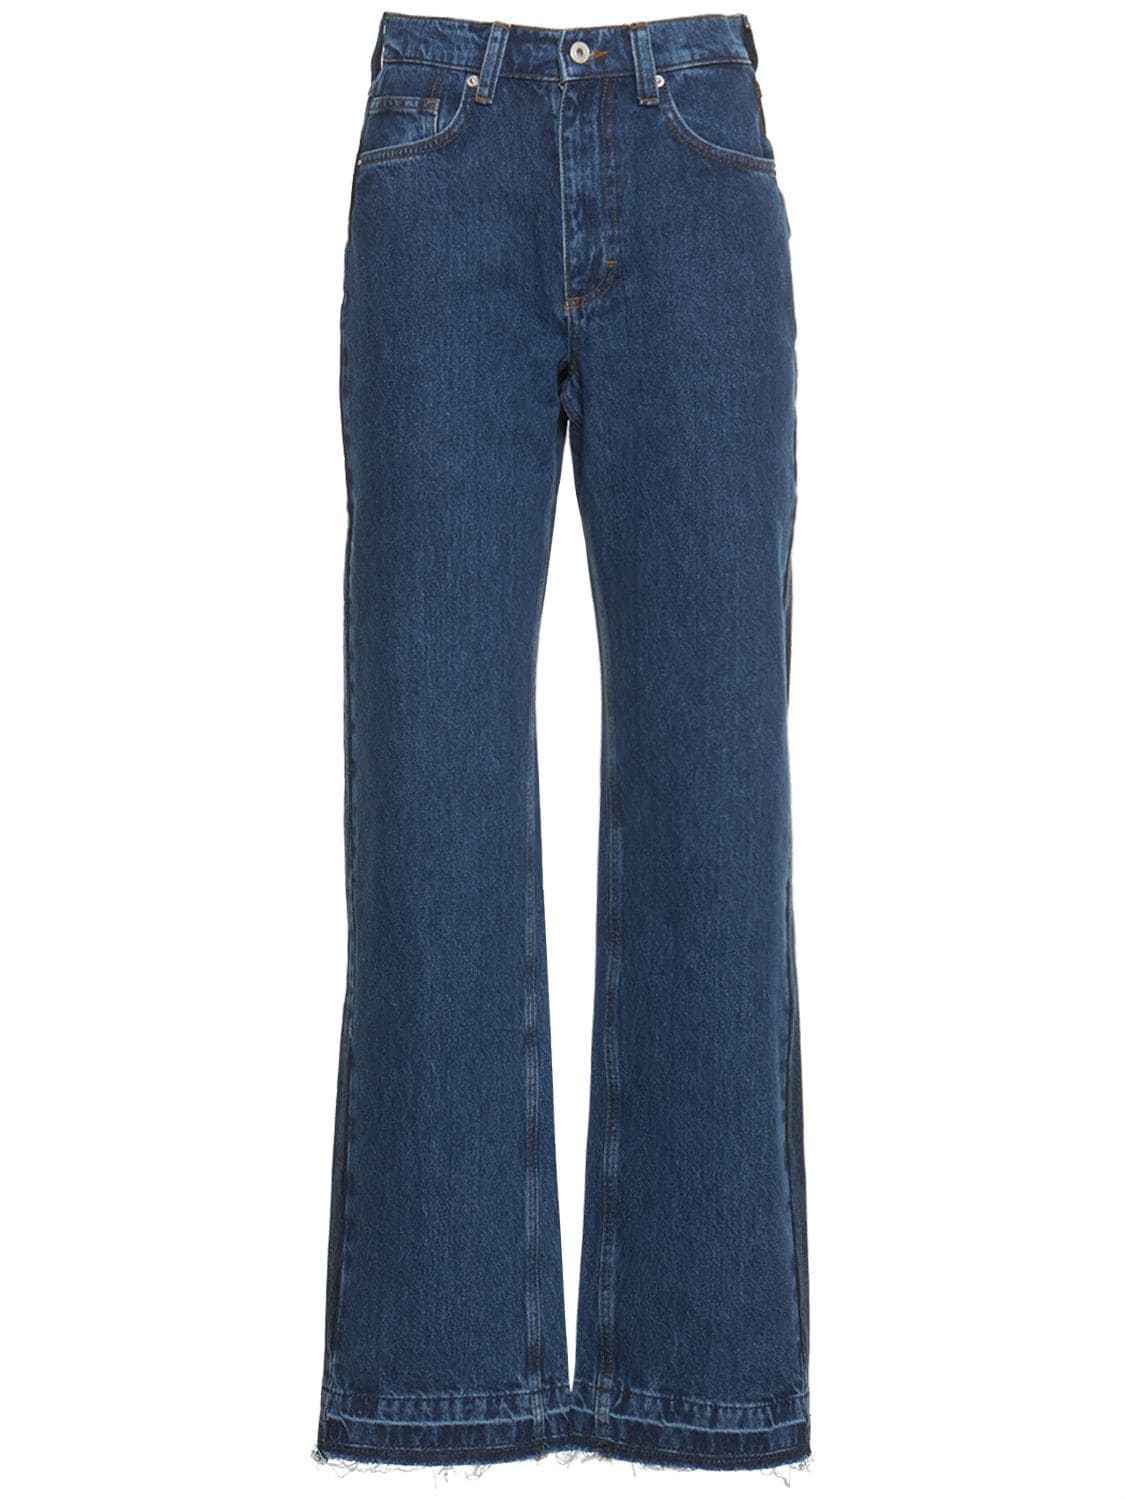 AXEL ARIGATO Hybrid Cotton Denim Jeans